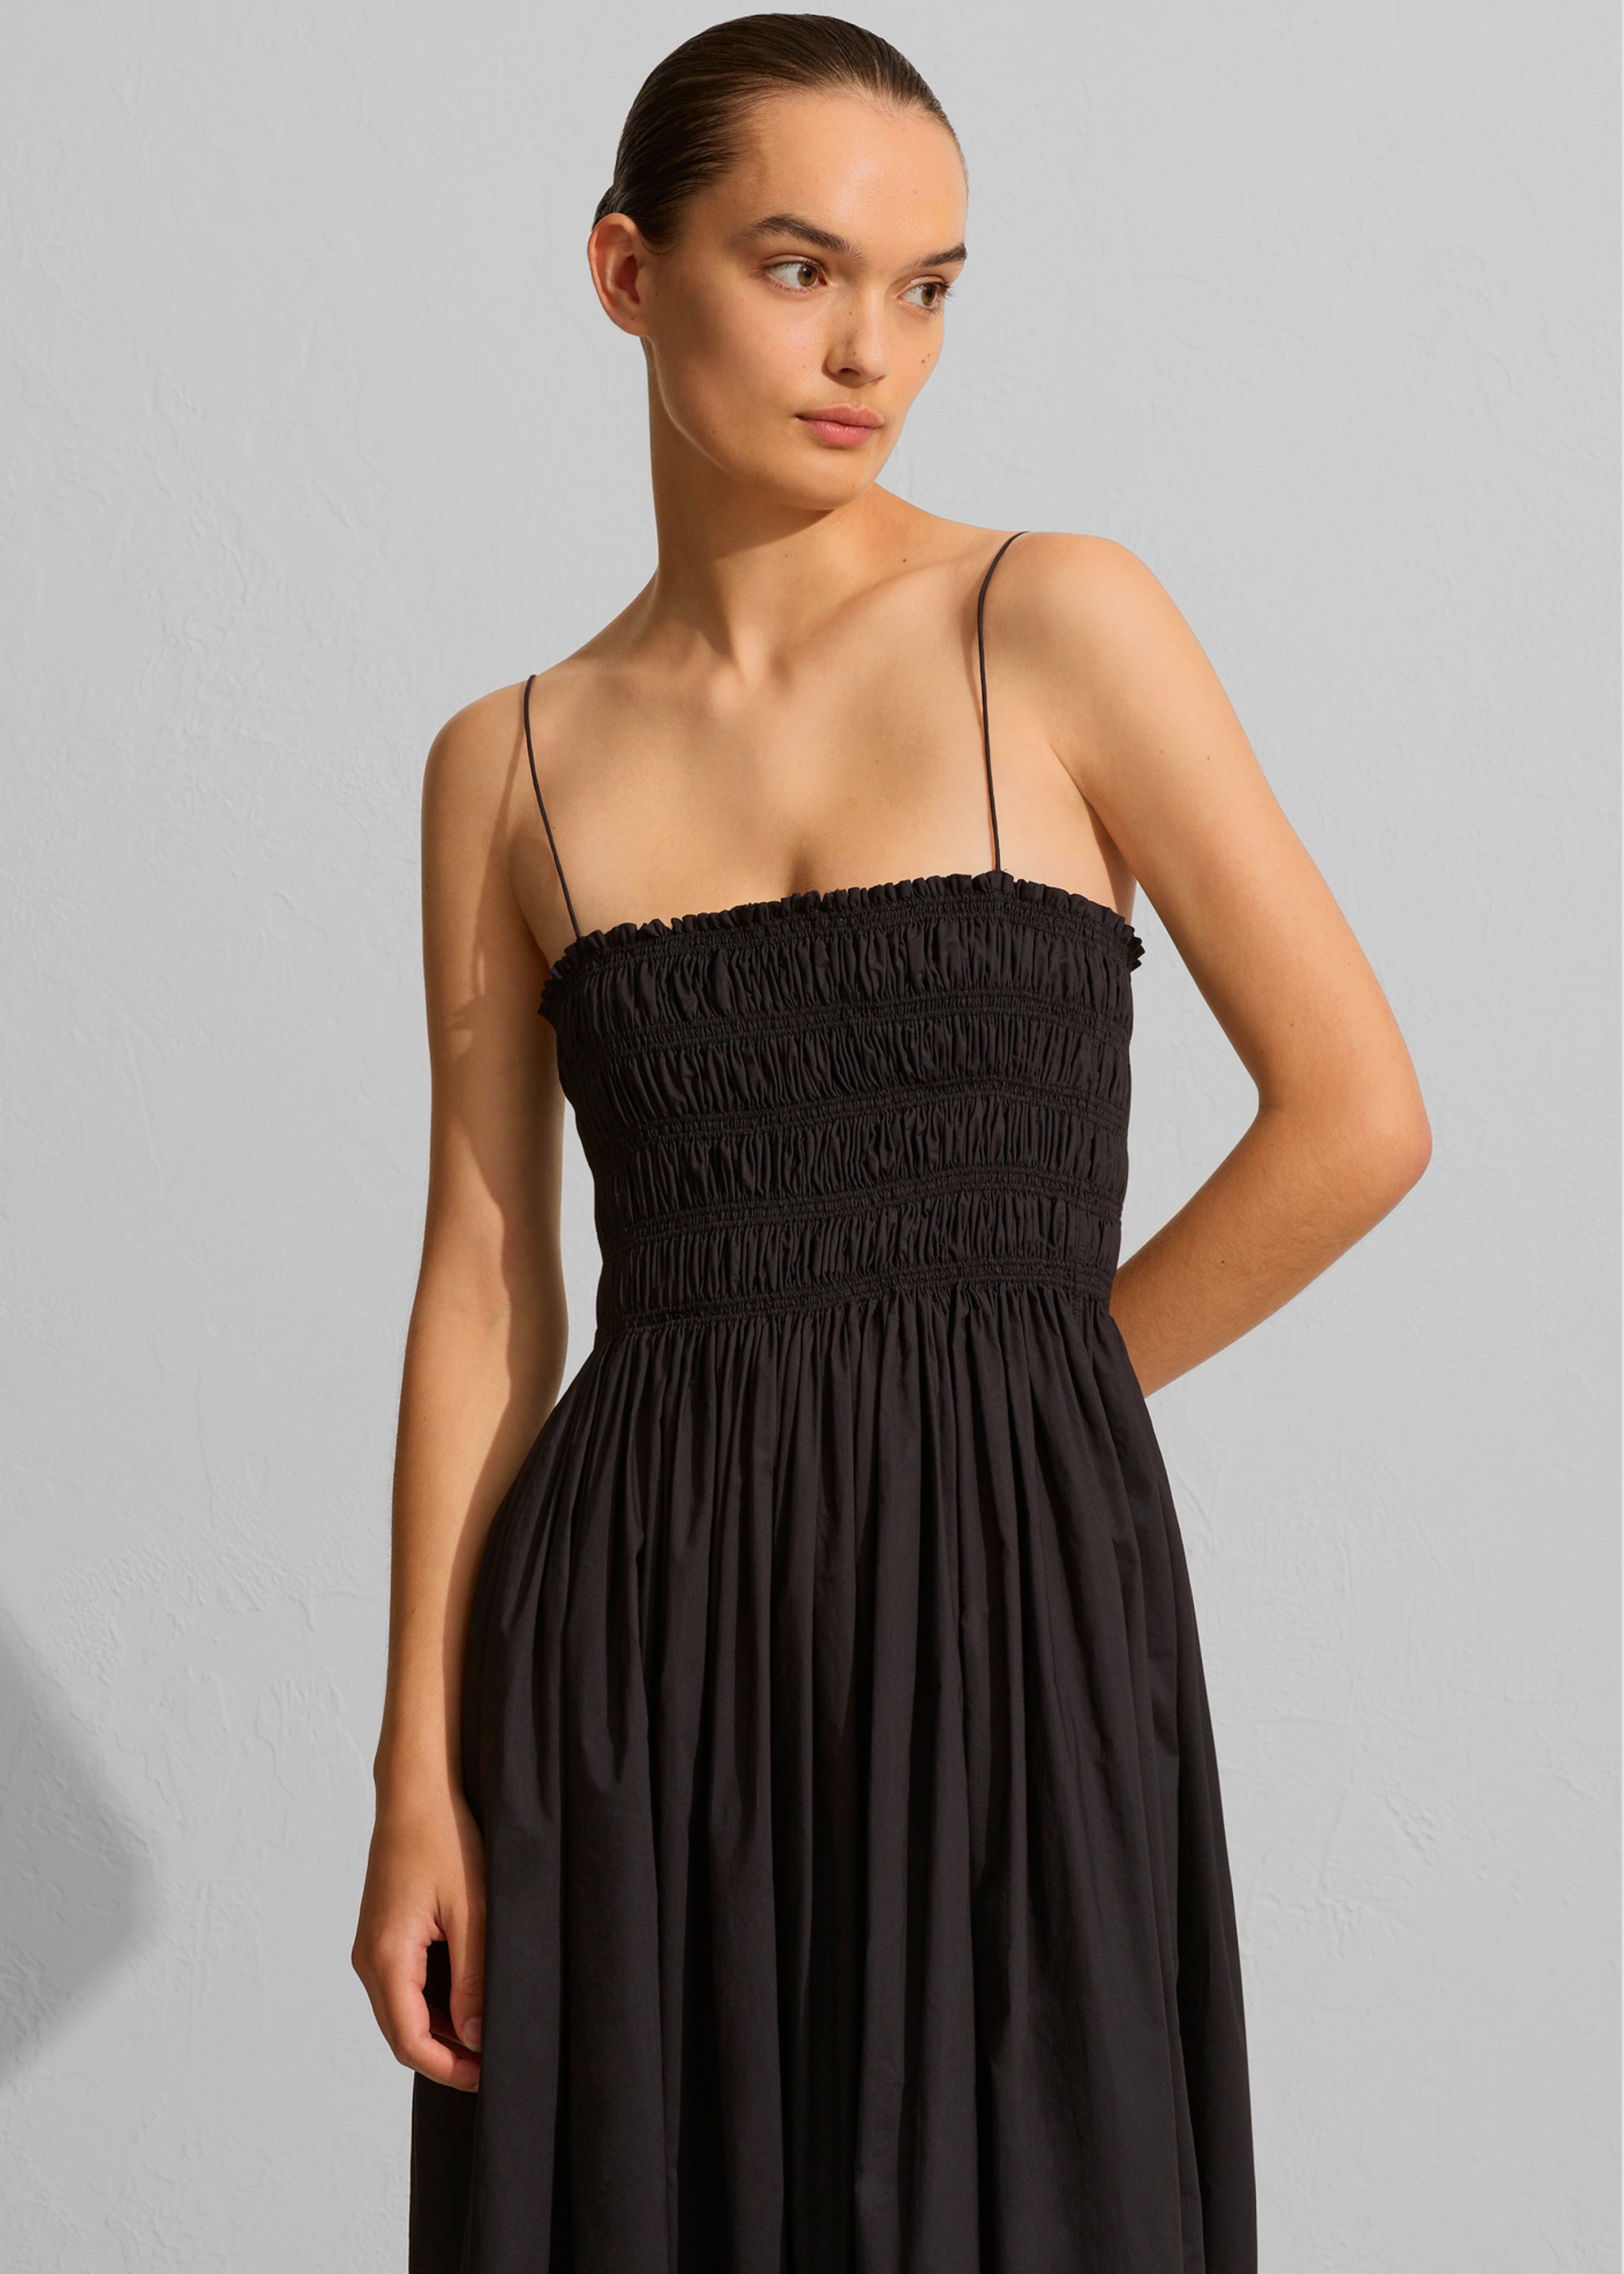 Matteau Shirred Bodice Dress - Black - 1